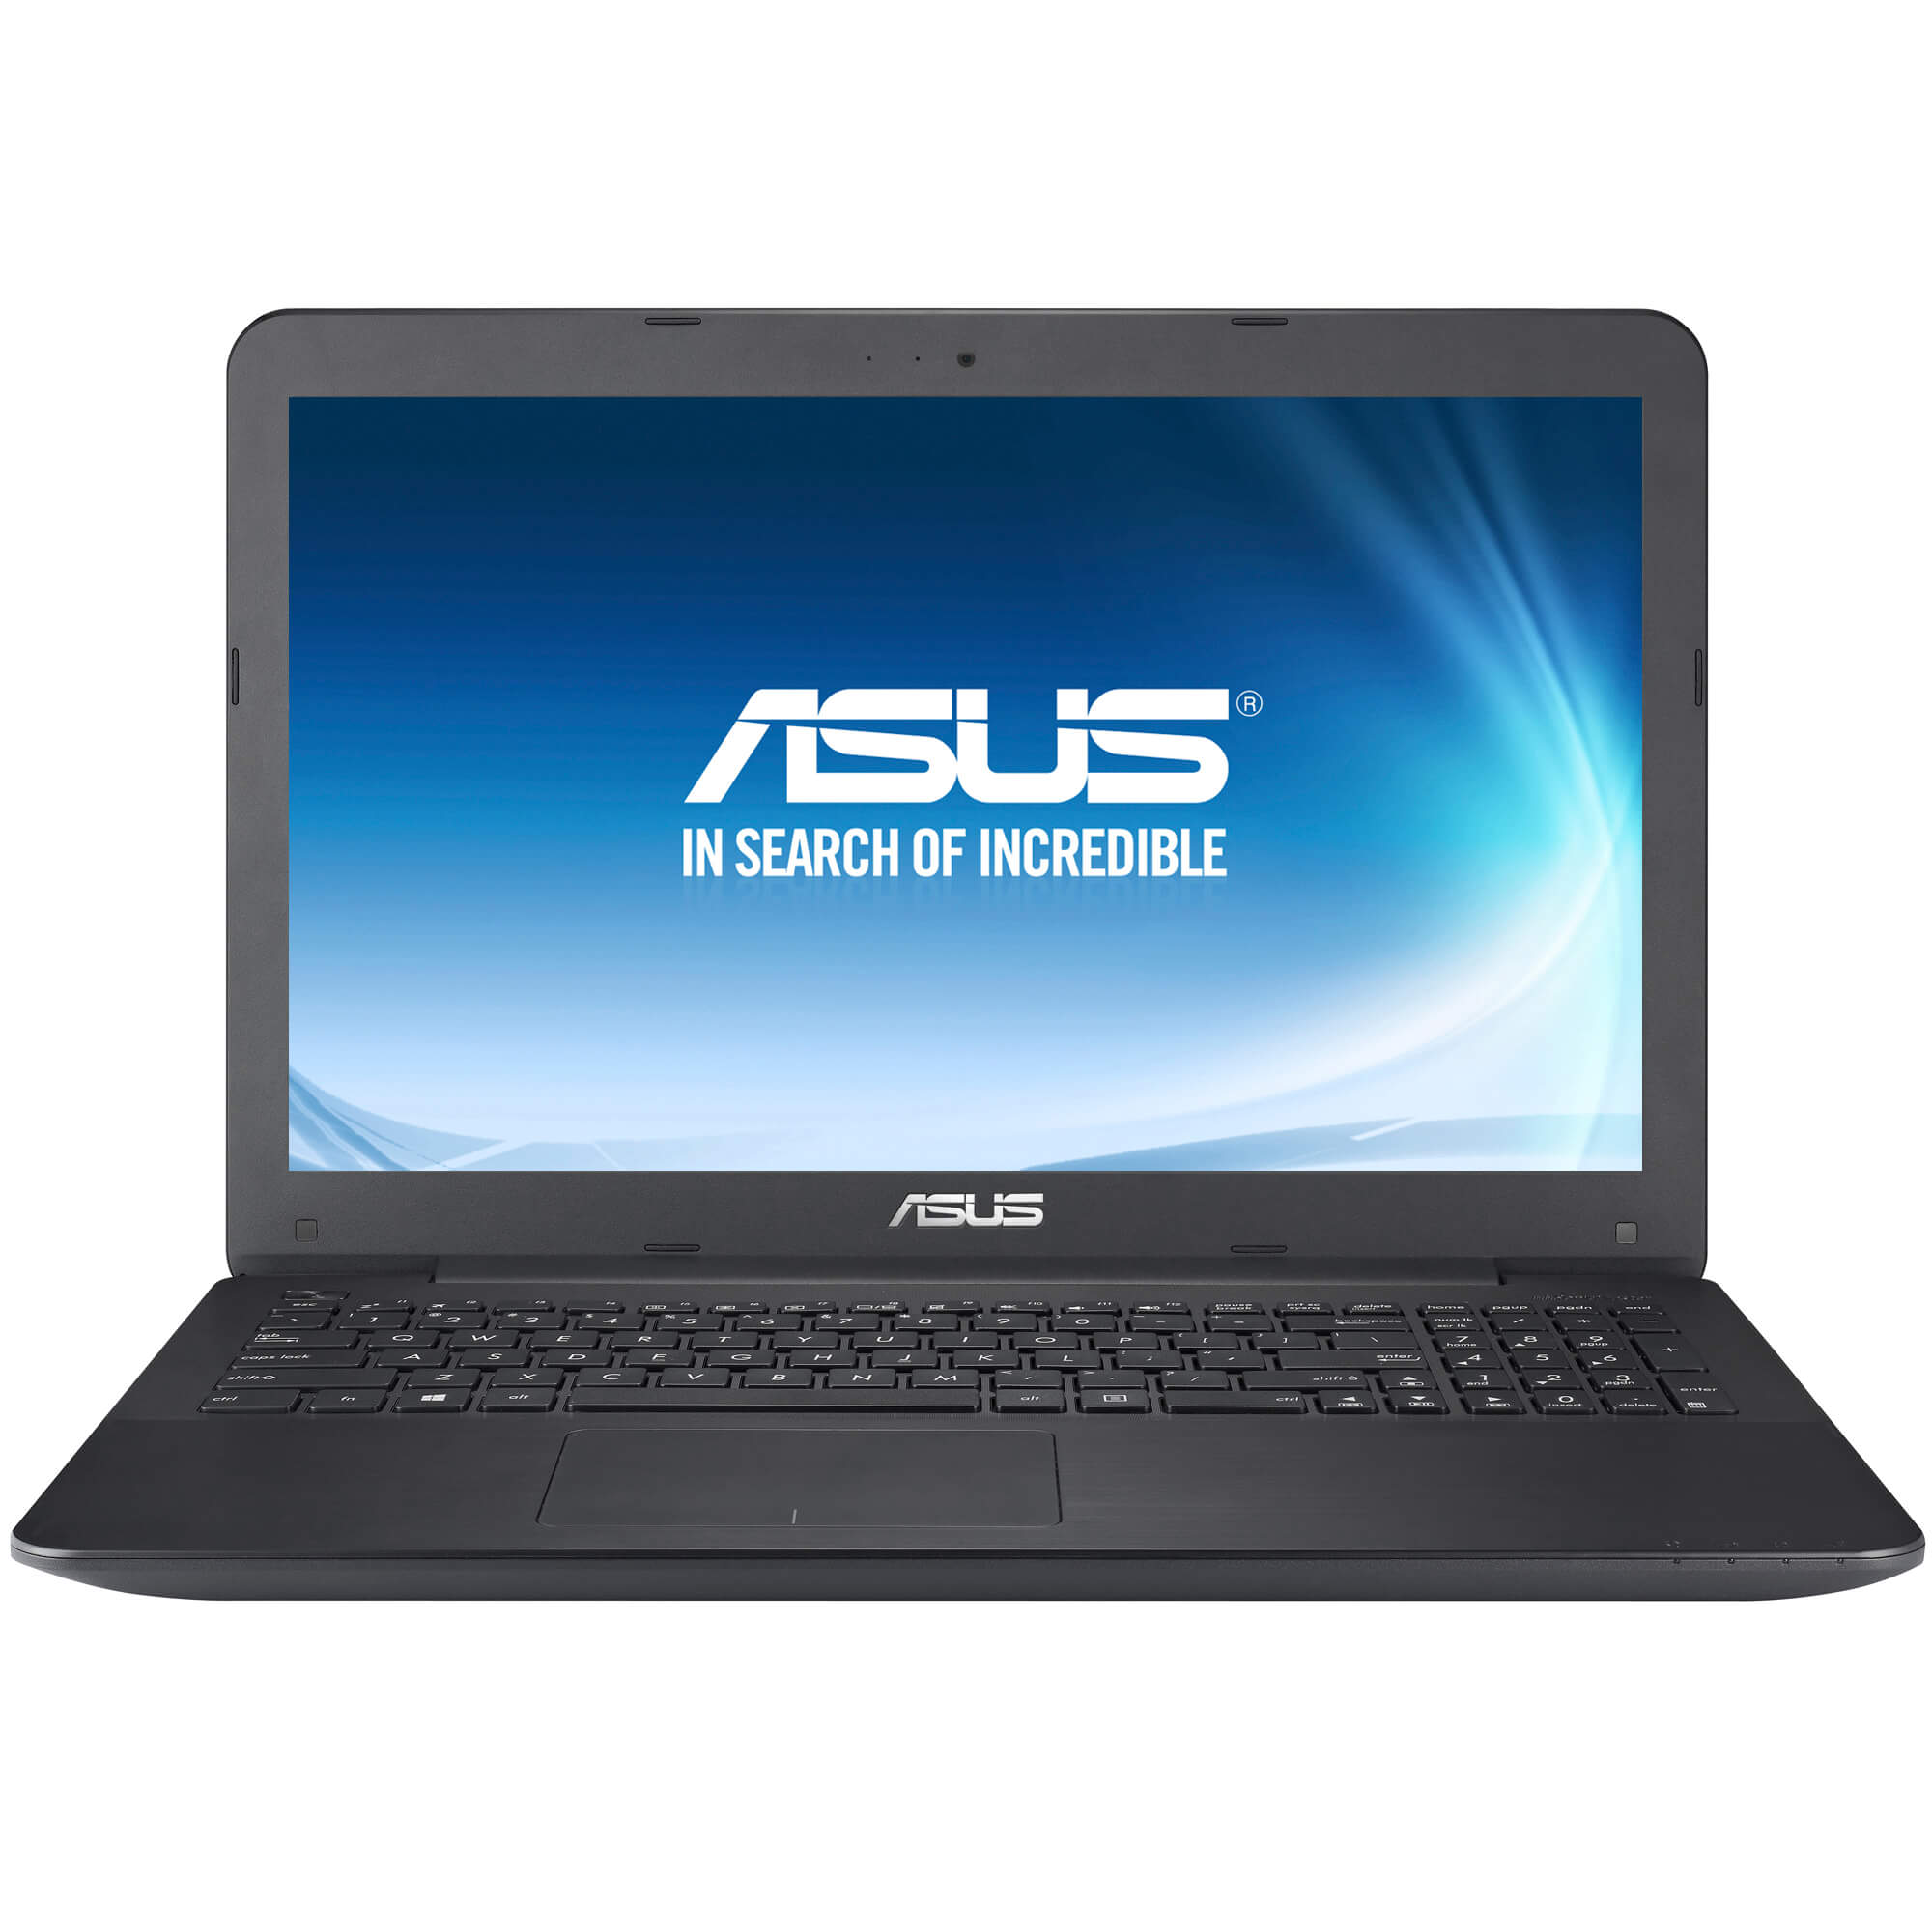  Laptop Asus XX064D, Intel Core i3-4030U, 4GB DDR3, HDD 500GB, nVidia GeForce 820M 2GB, Free DOS 